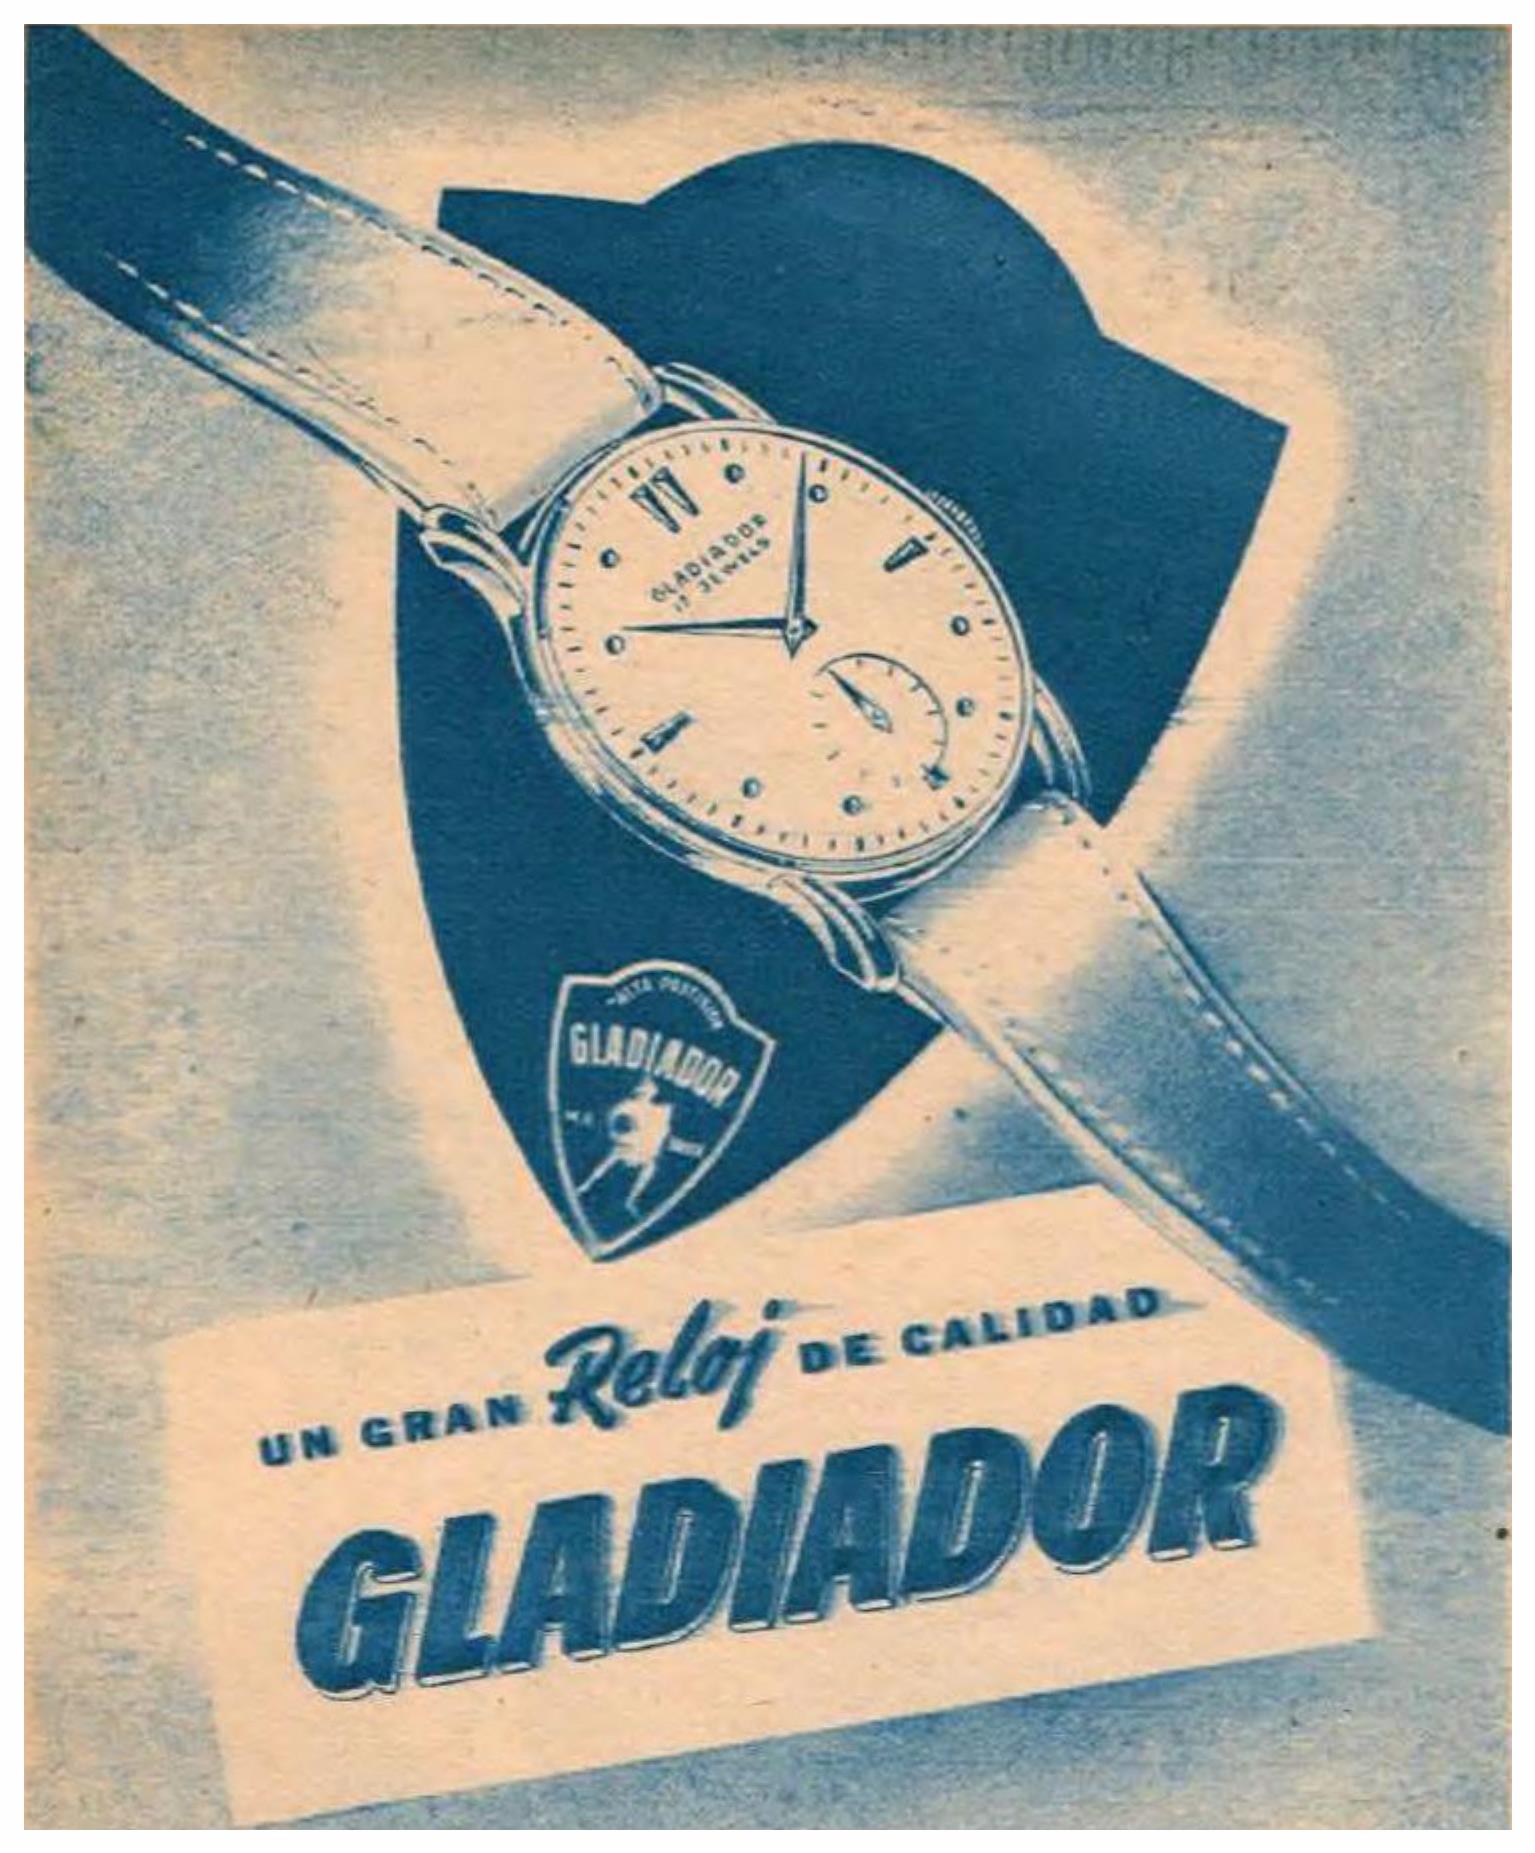 Gladiator 1955 0.jpg